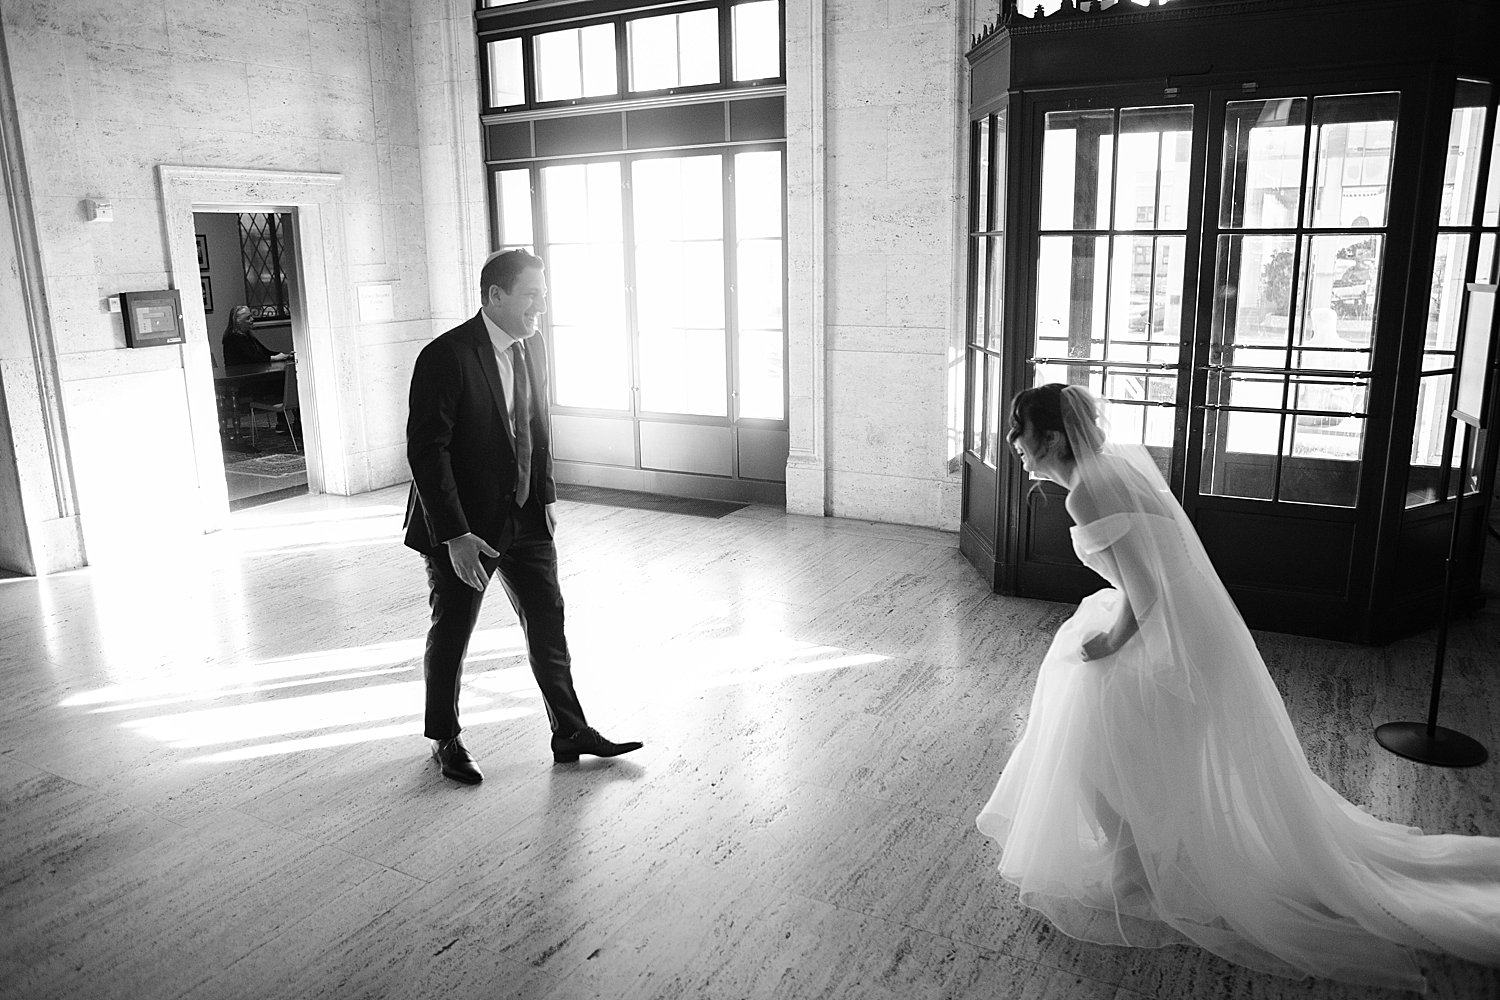 Chicago art musuem documentary wedding photographer  0019.jpg